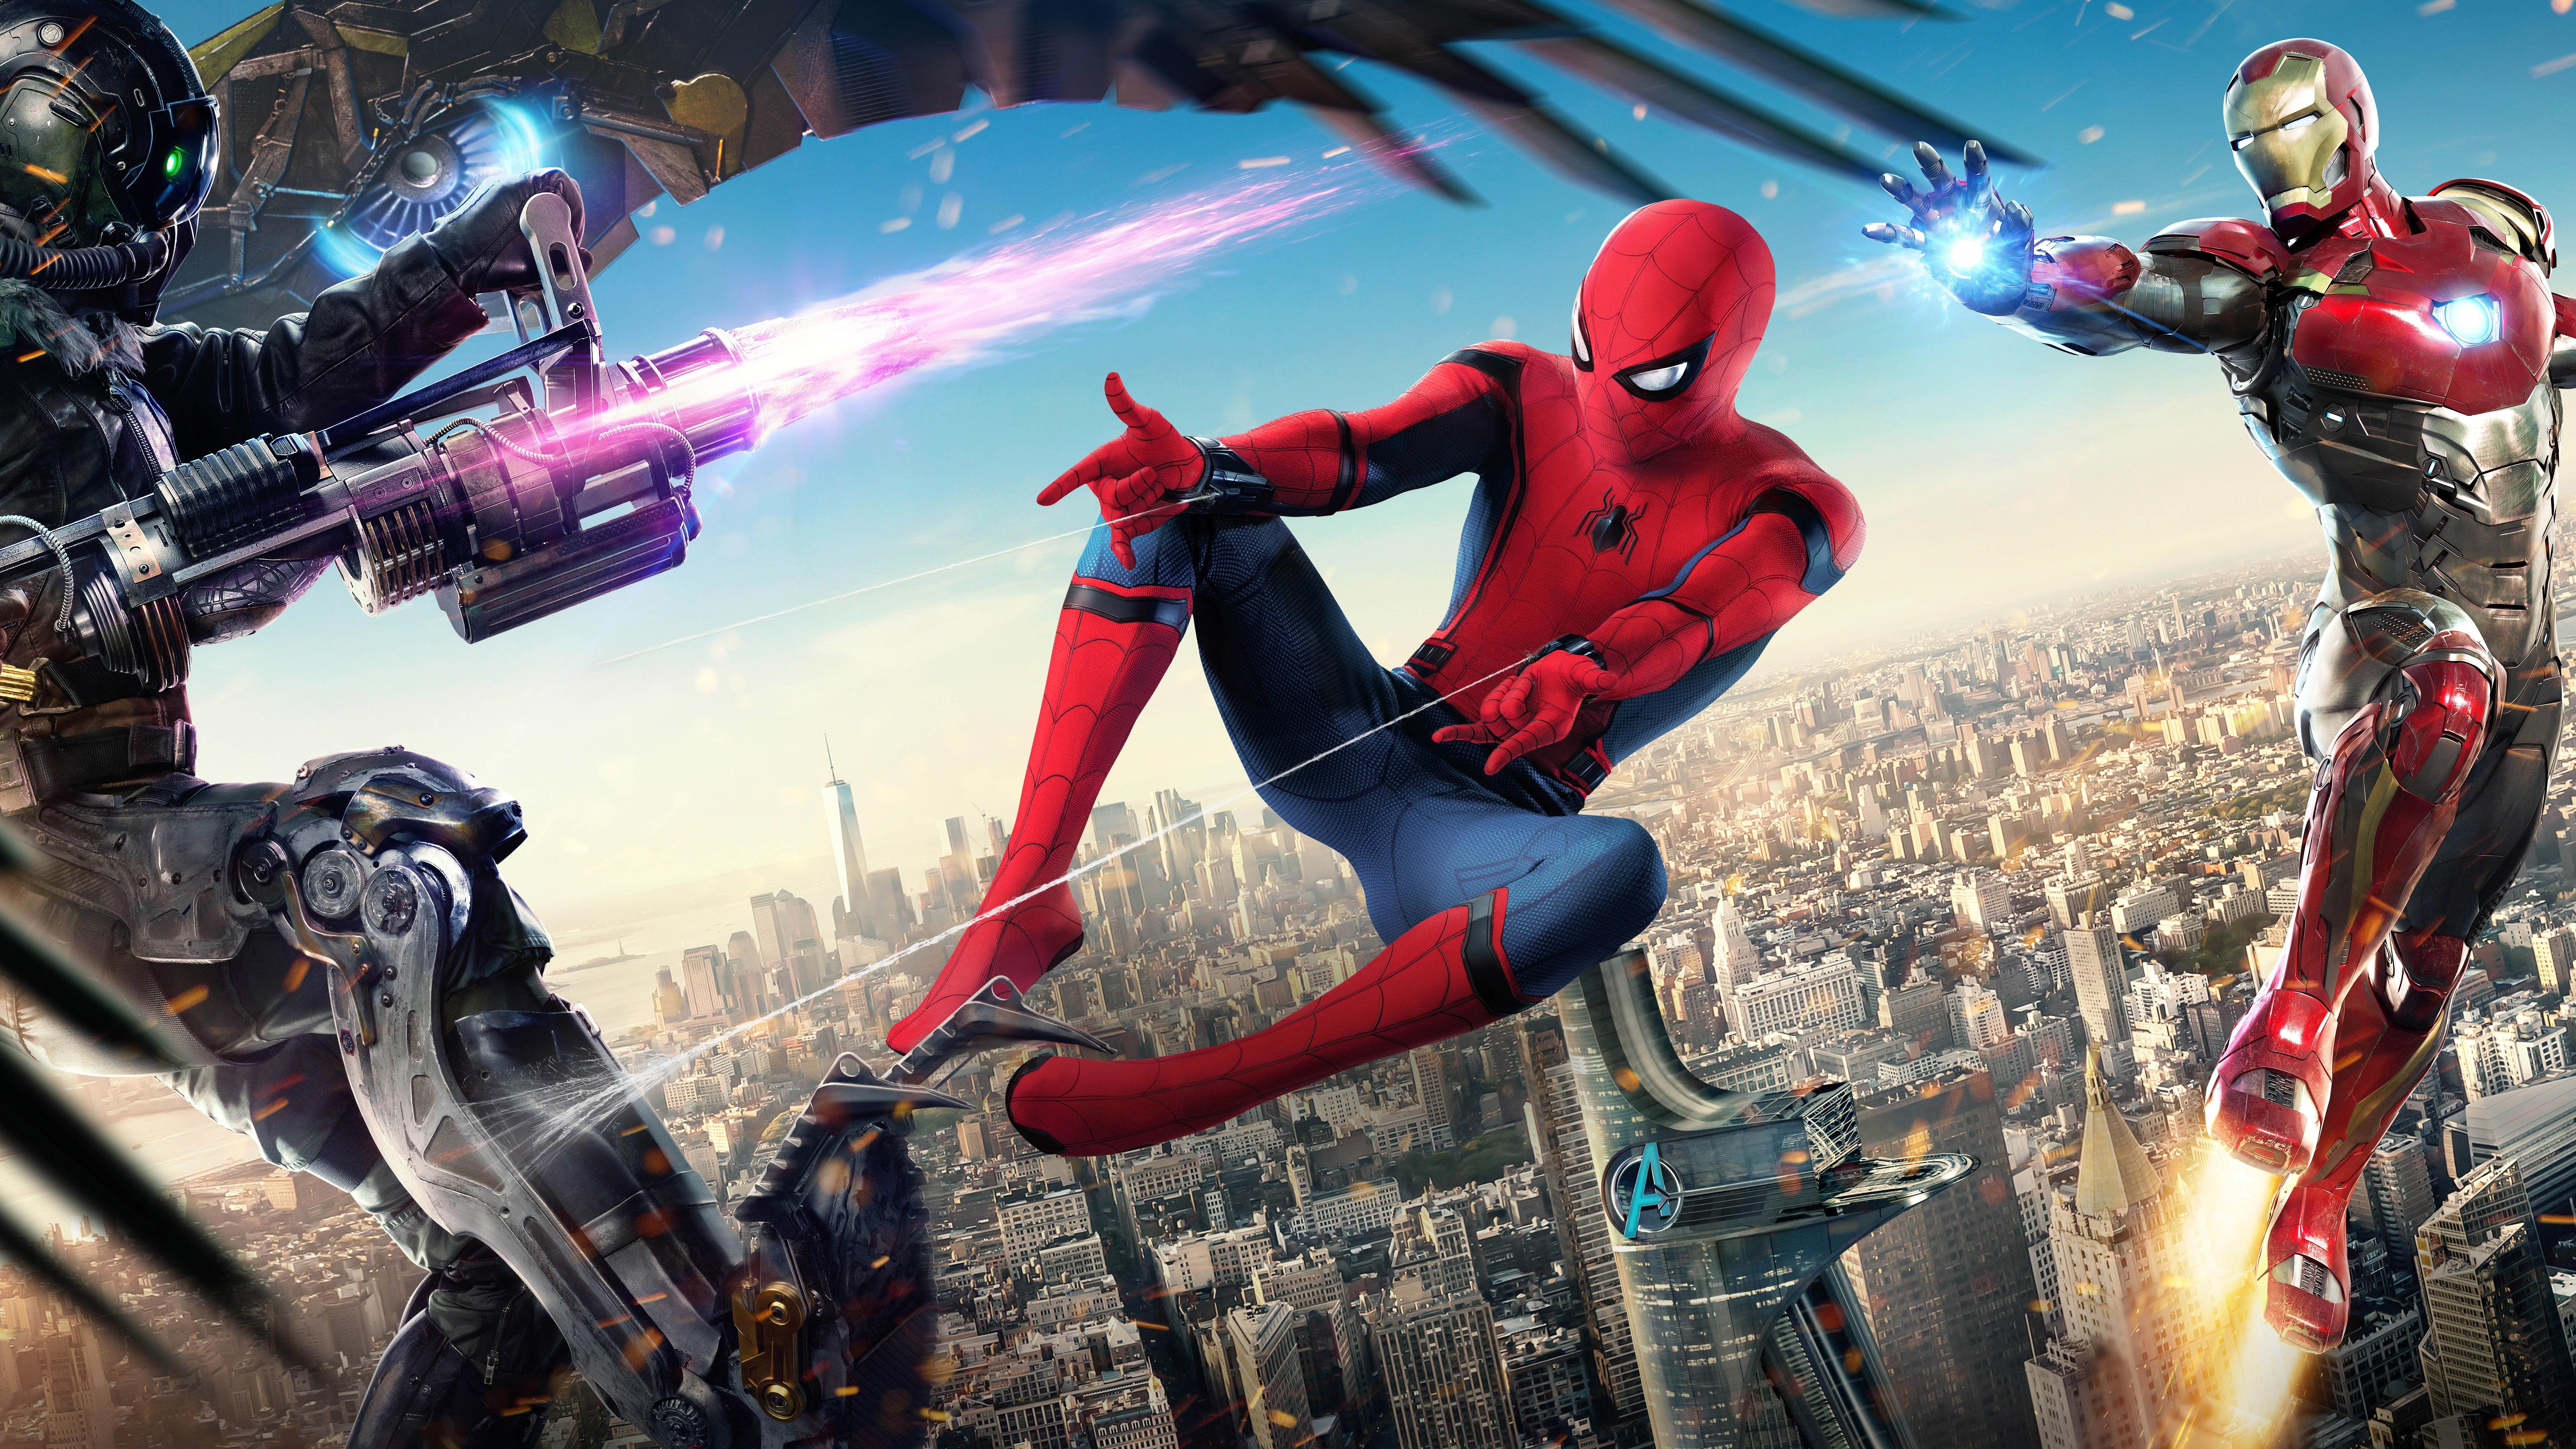 Spider Man And Iron Man Wallpaper, Spider Man: Homecoming 2017